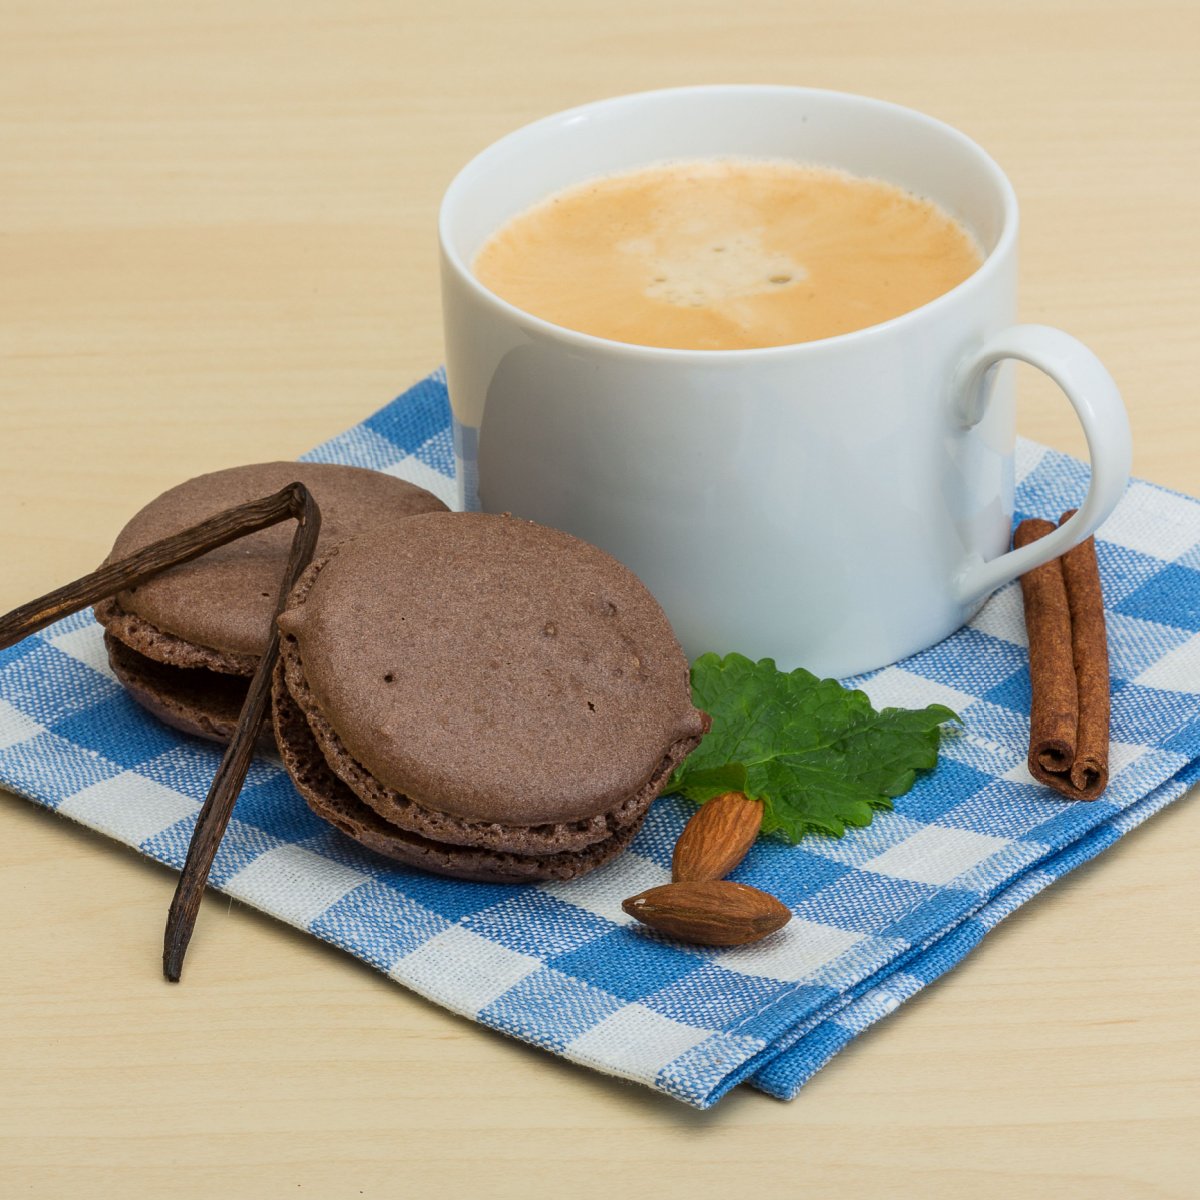 french vanilla coffee in white ceramic mug beside macaroons and vanilla sticks on blue hankerchief